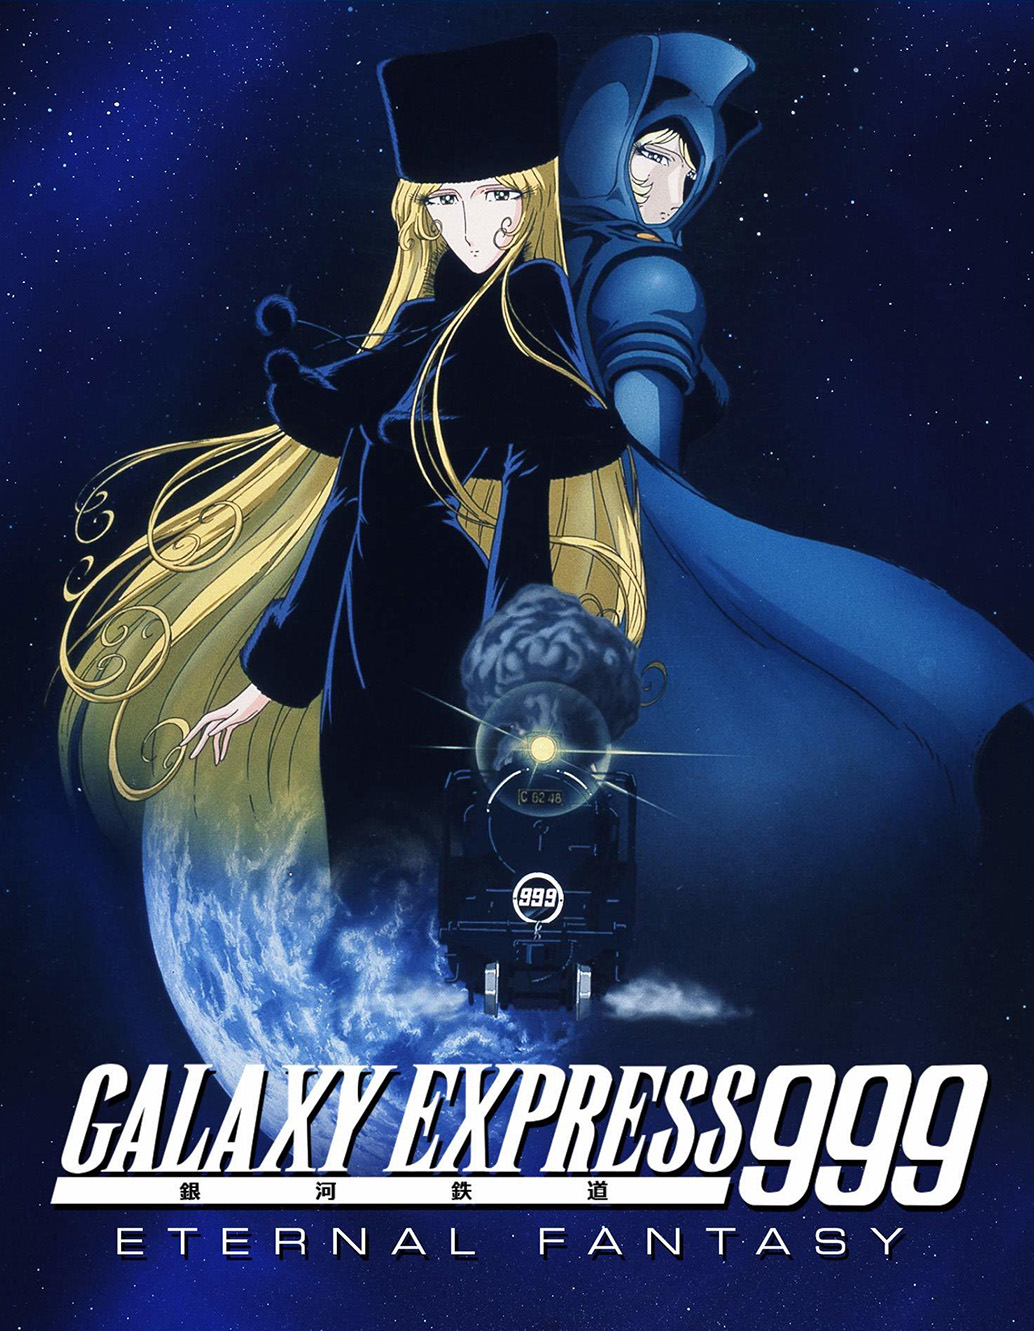 Anime picture galaxy express 999 870x1200 350204 en